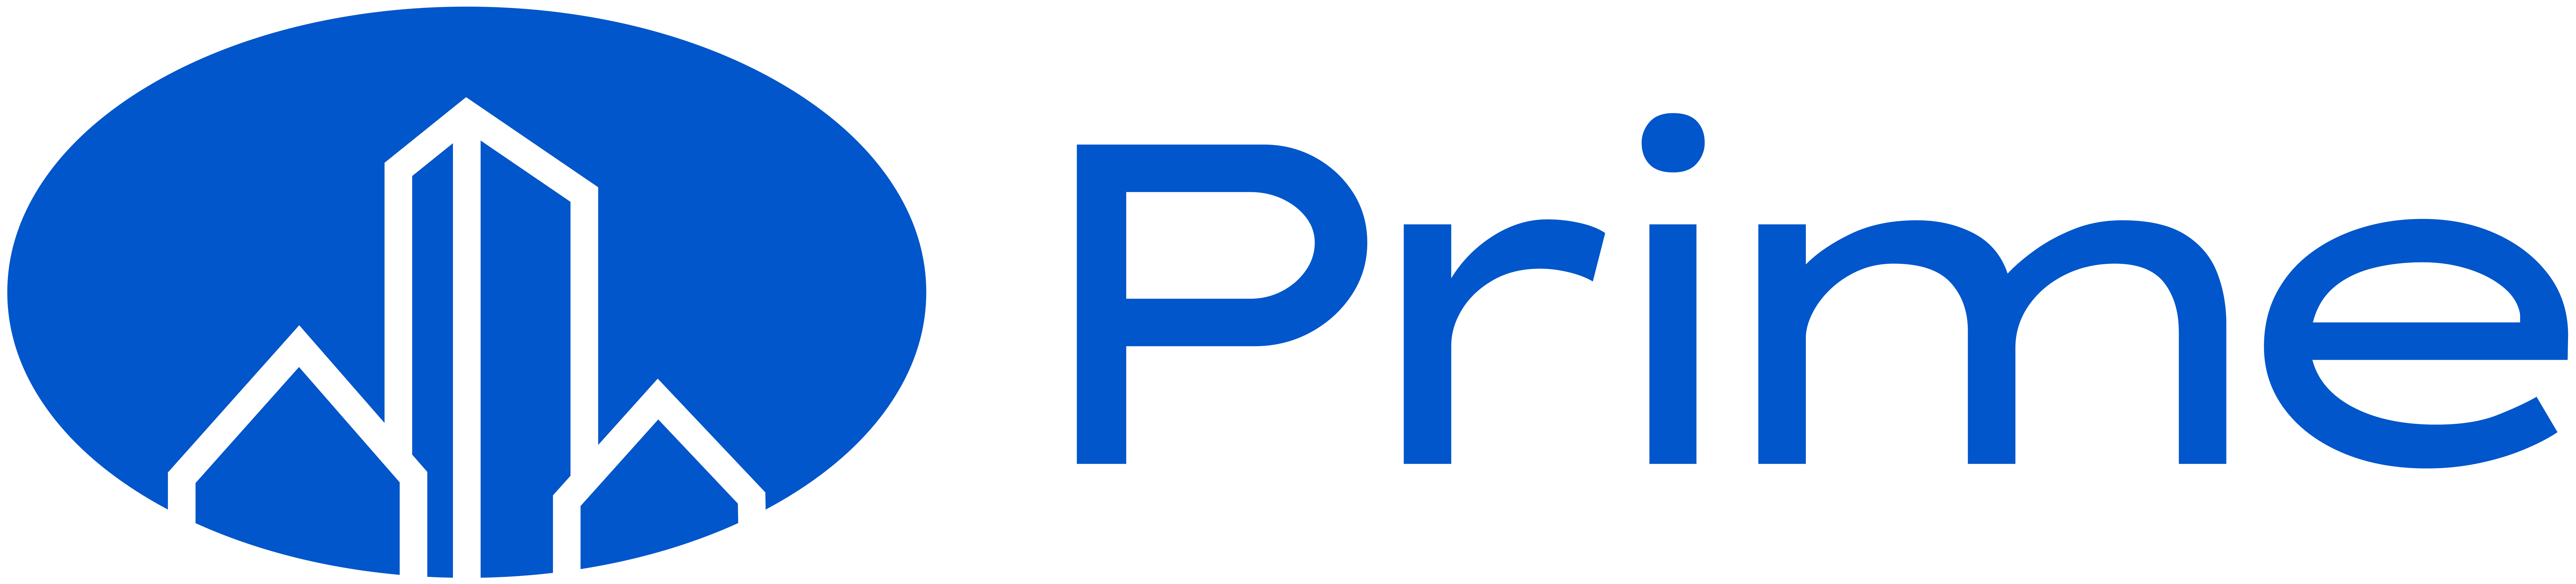 Prime Companies logo